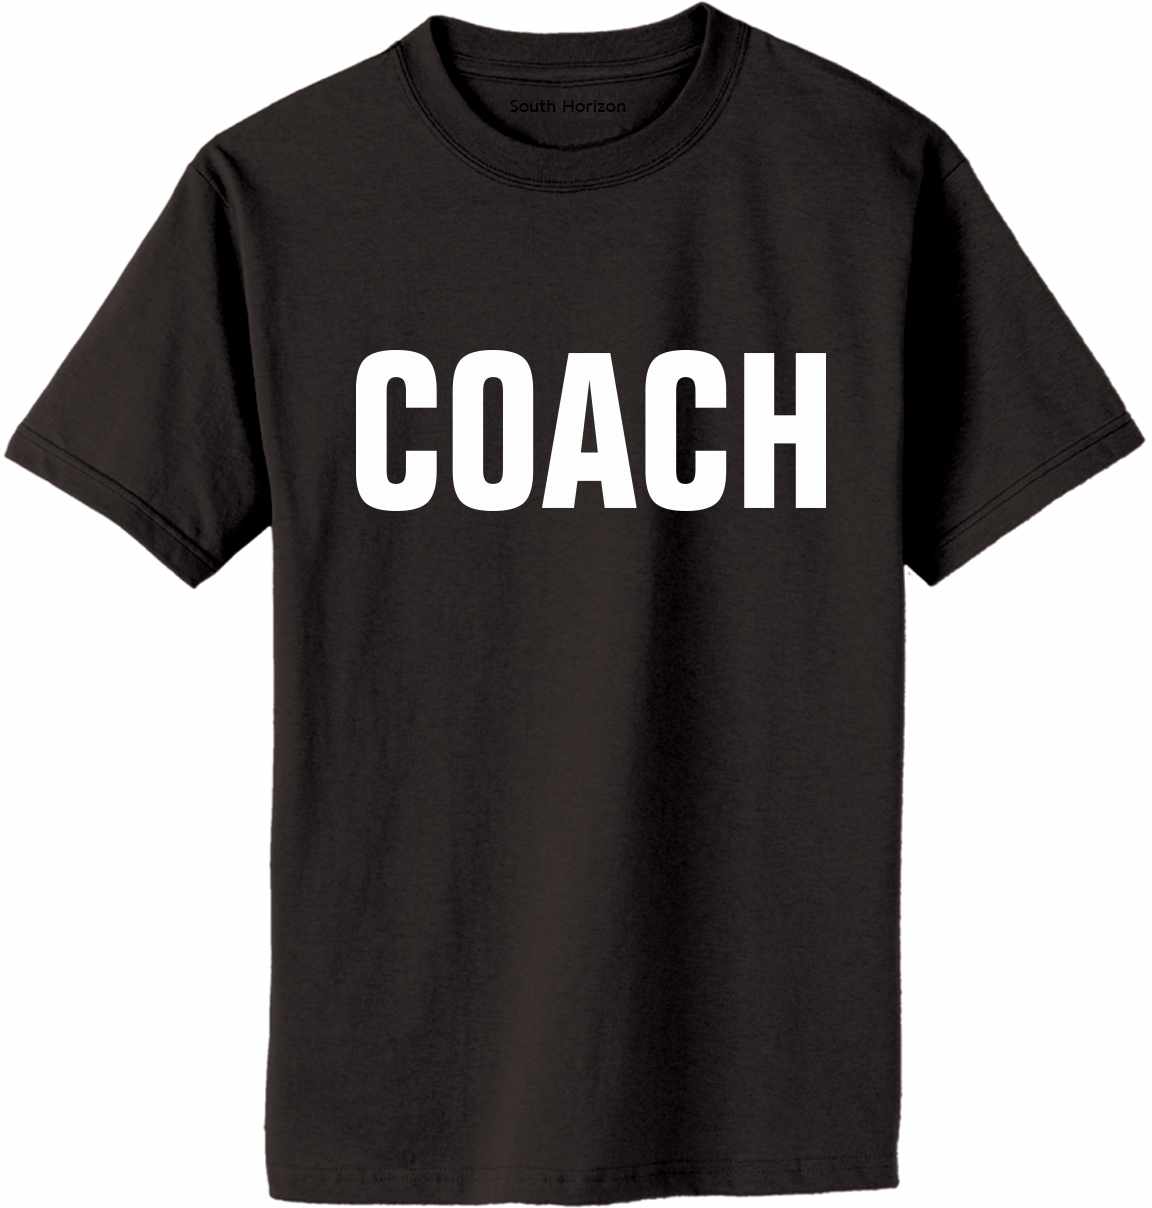 COACH Adult T-Shirt (#406-1)